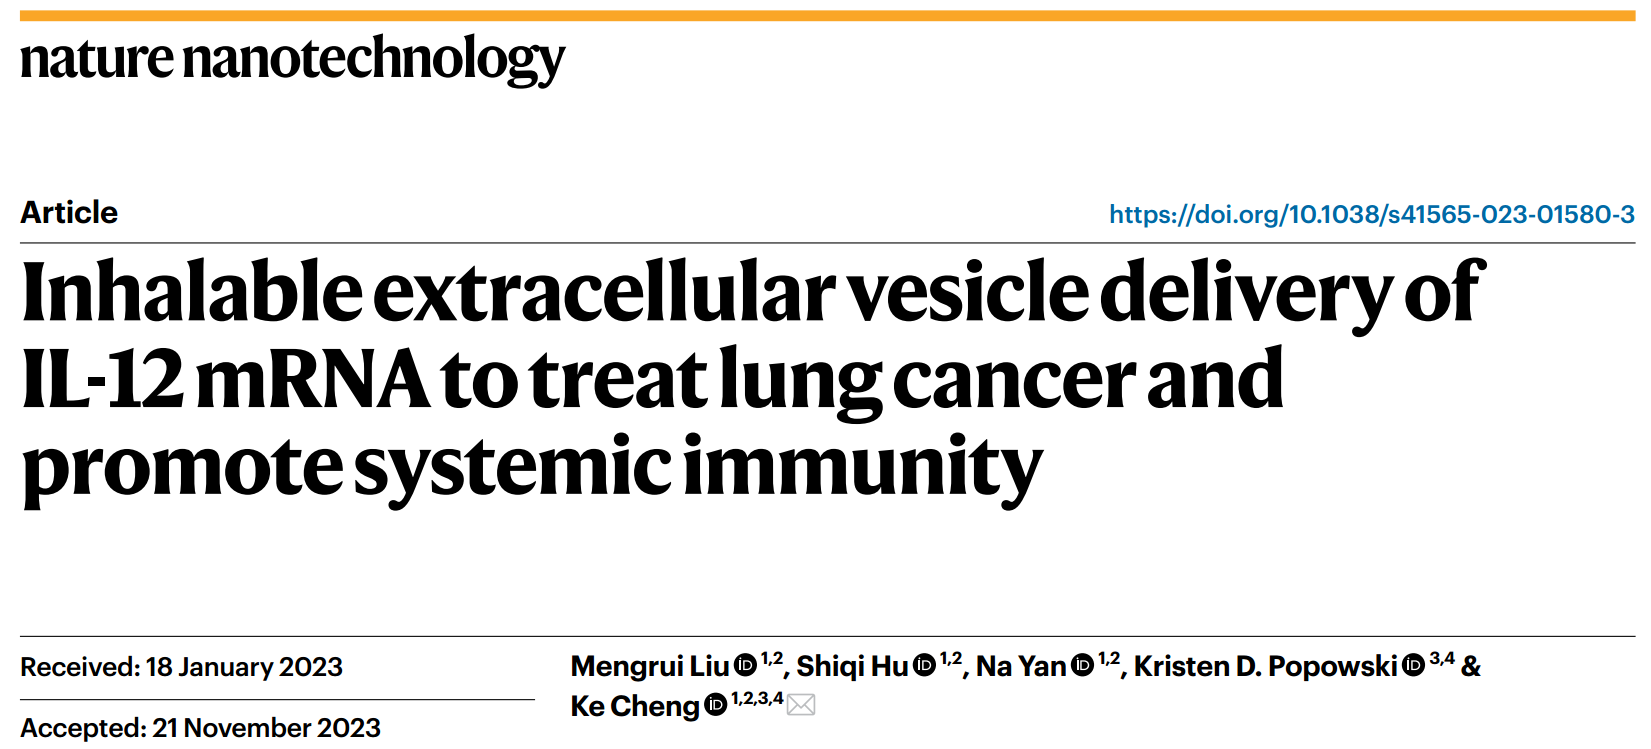 【Nat Nanotechnol】程柯团队：可吸入细胞外囊泡递送IL-12 mRNA治疗肺癌并促进全身免疫